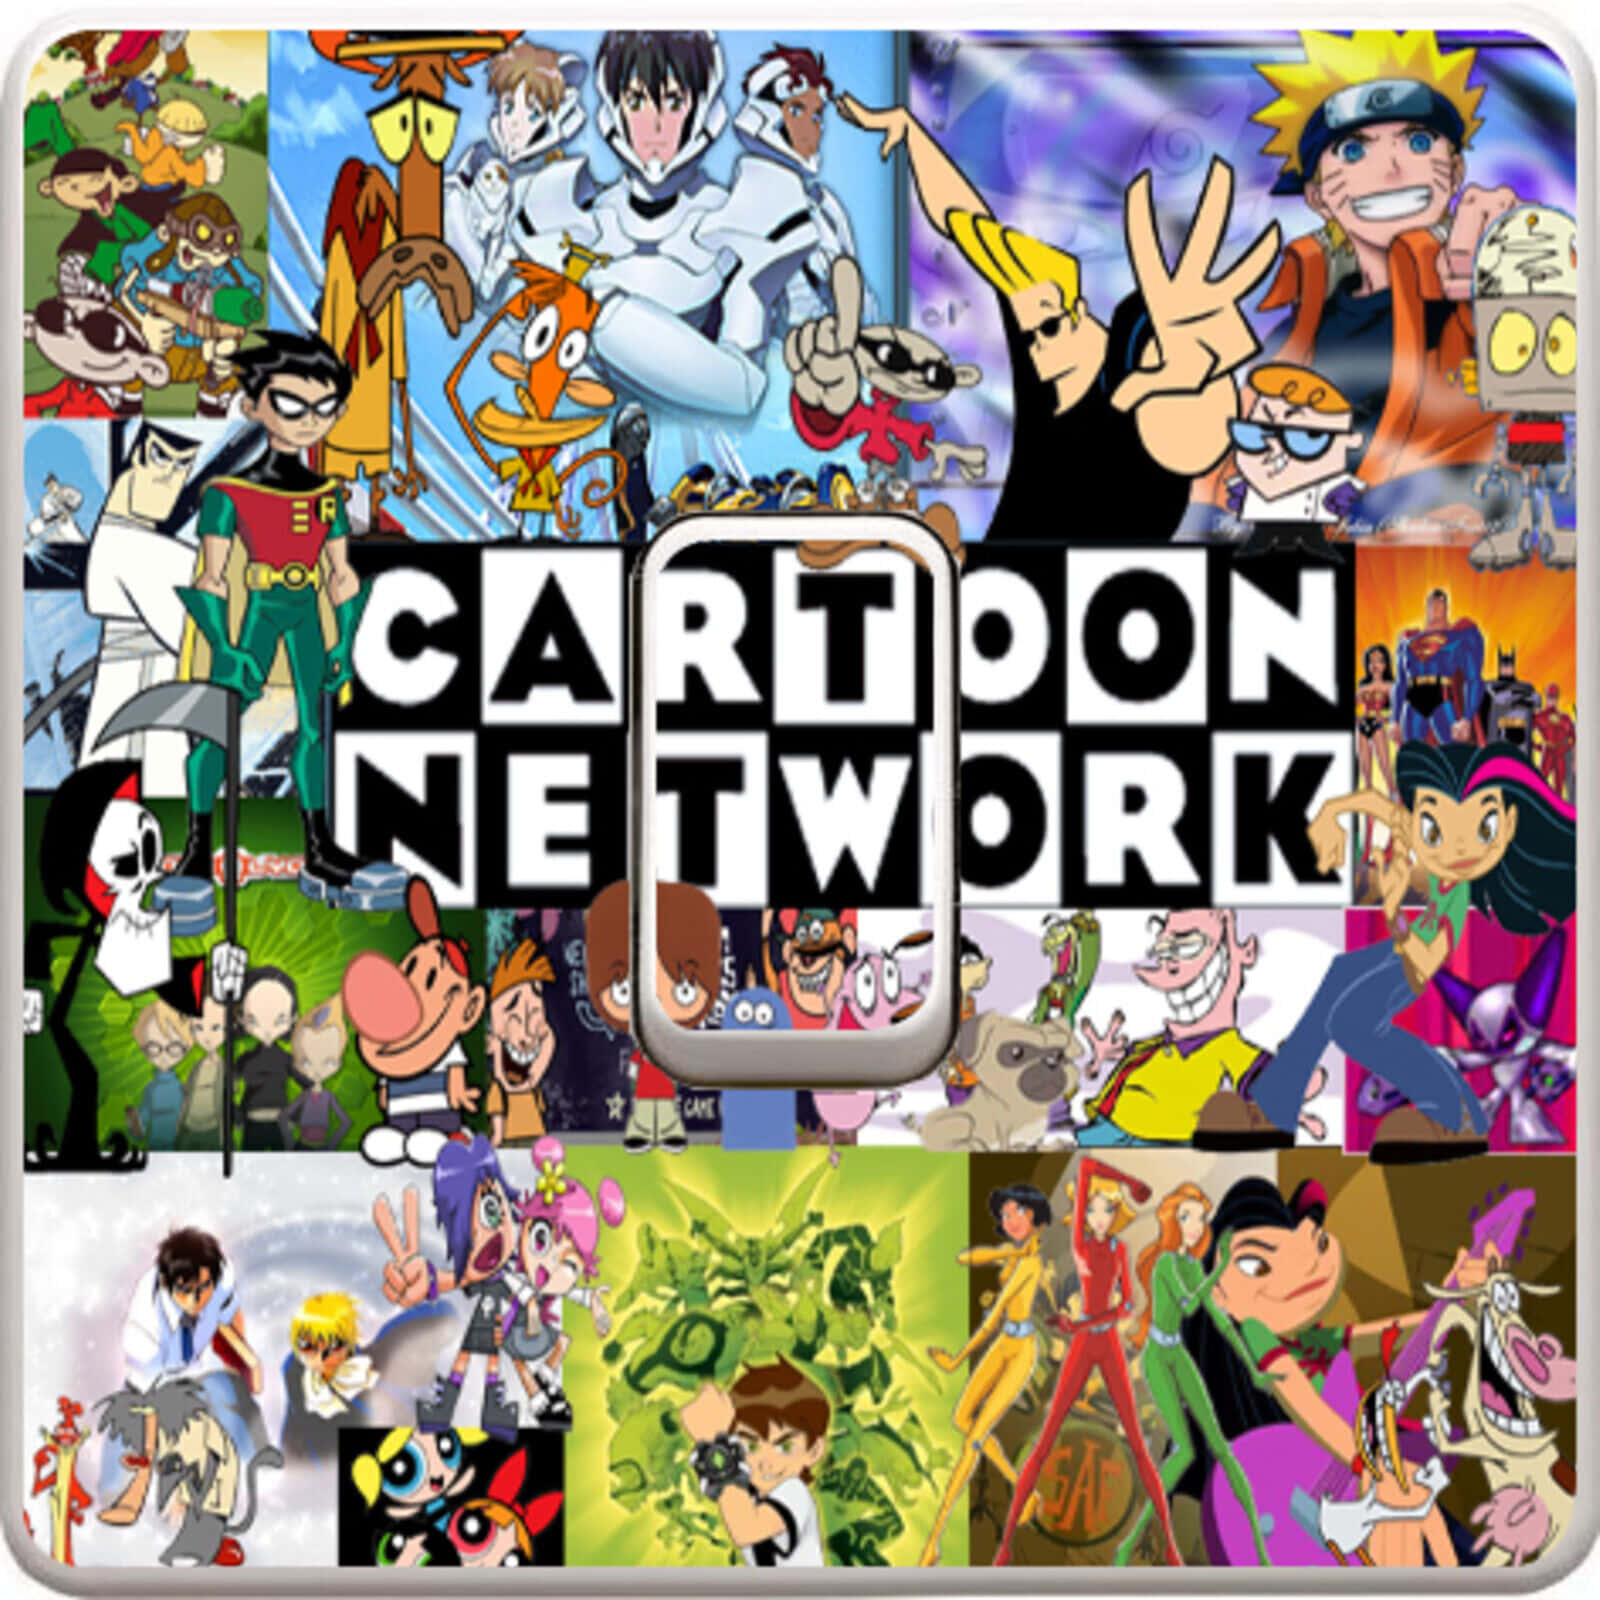 "Unlock the full potential of Cartoon Network"